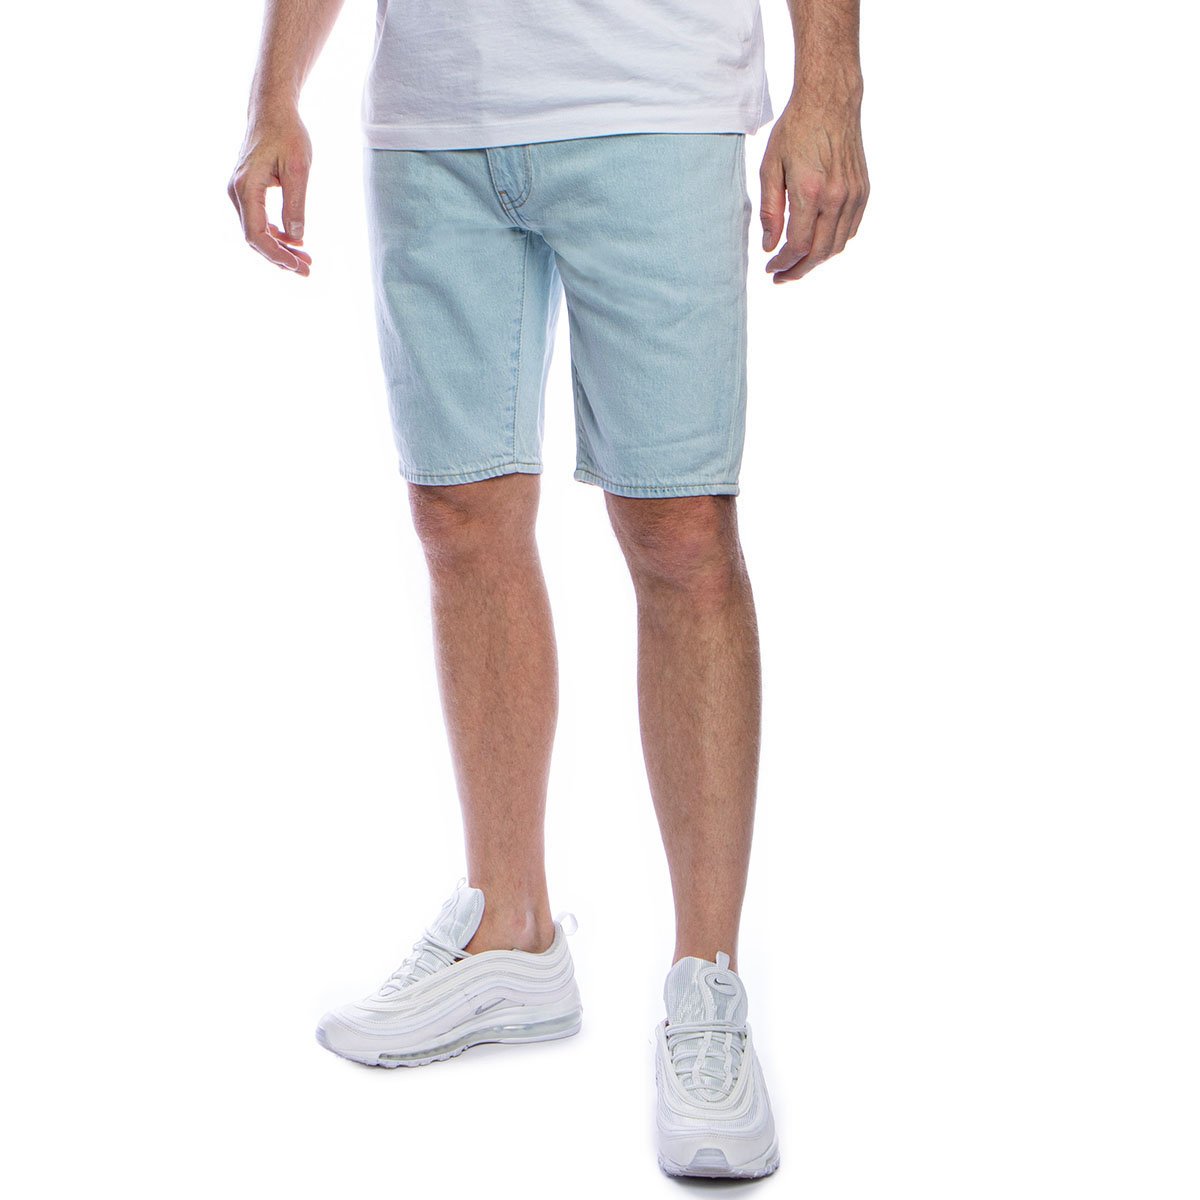 Levi's 511 Slim Hemmed Shorts light blue | Bludshop.com